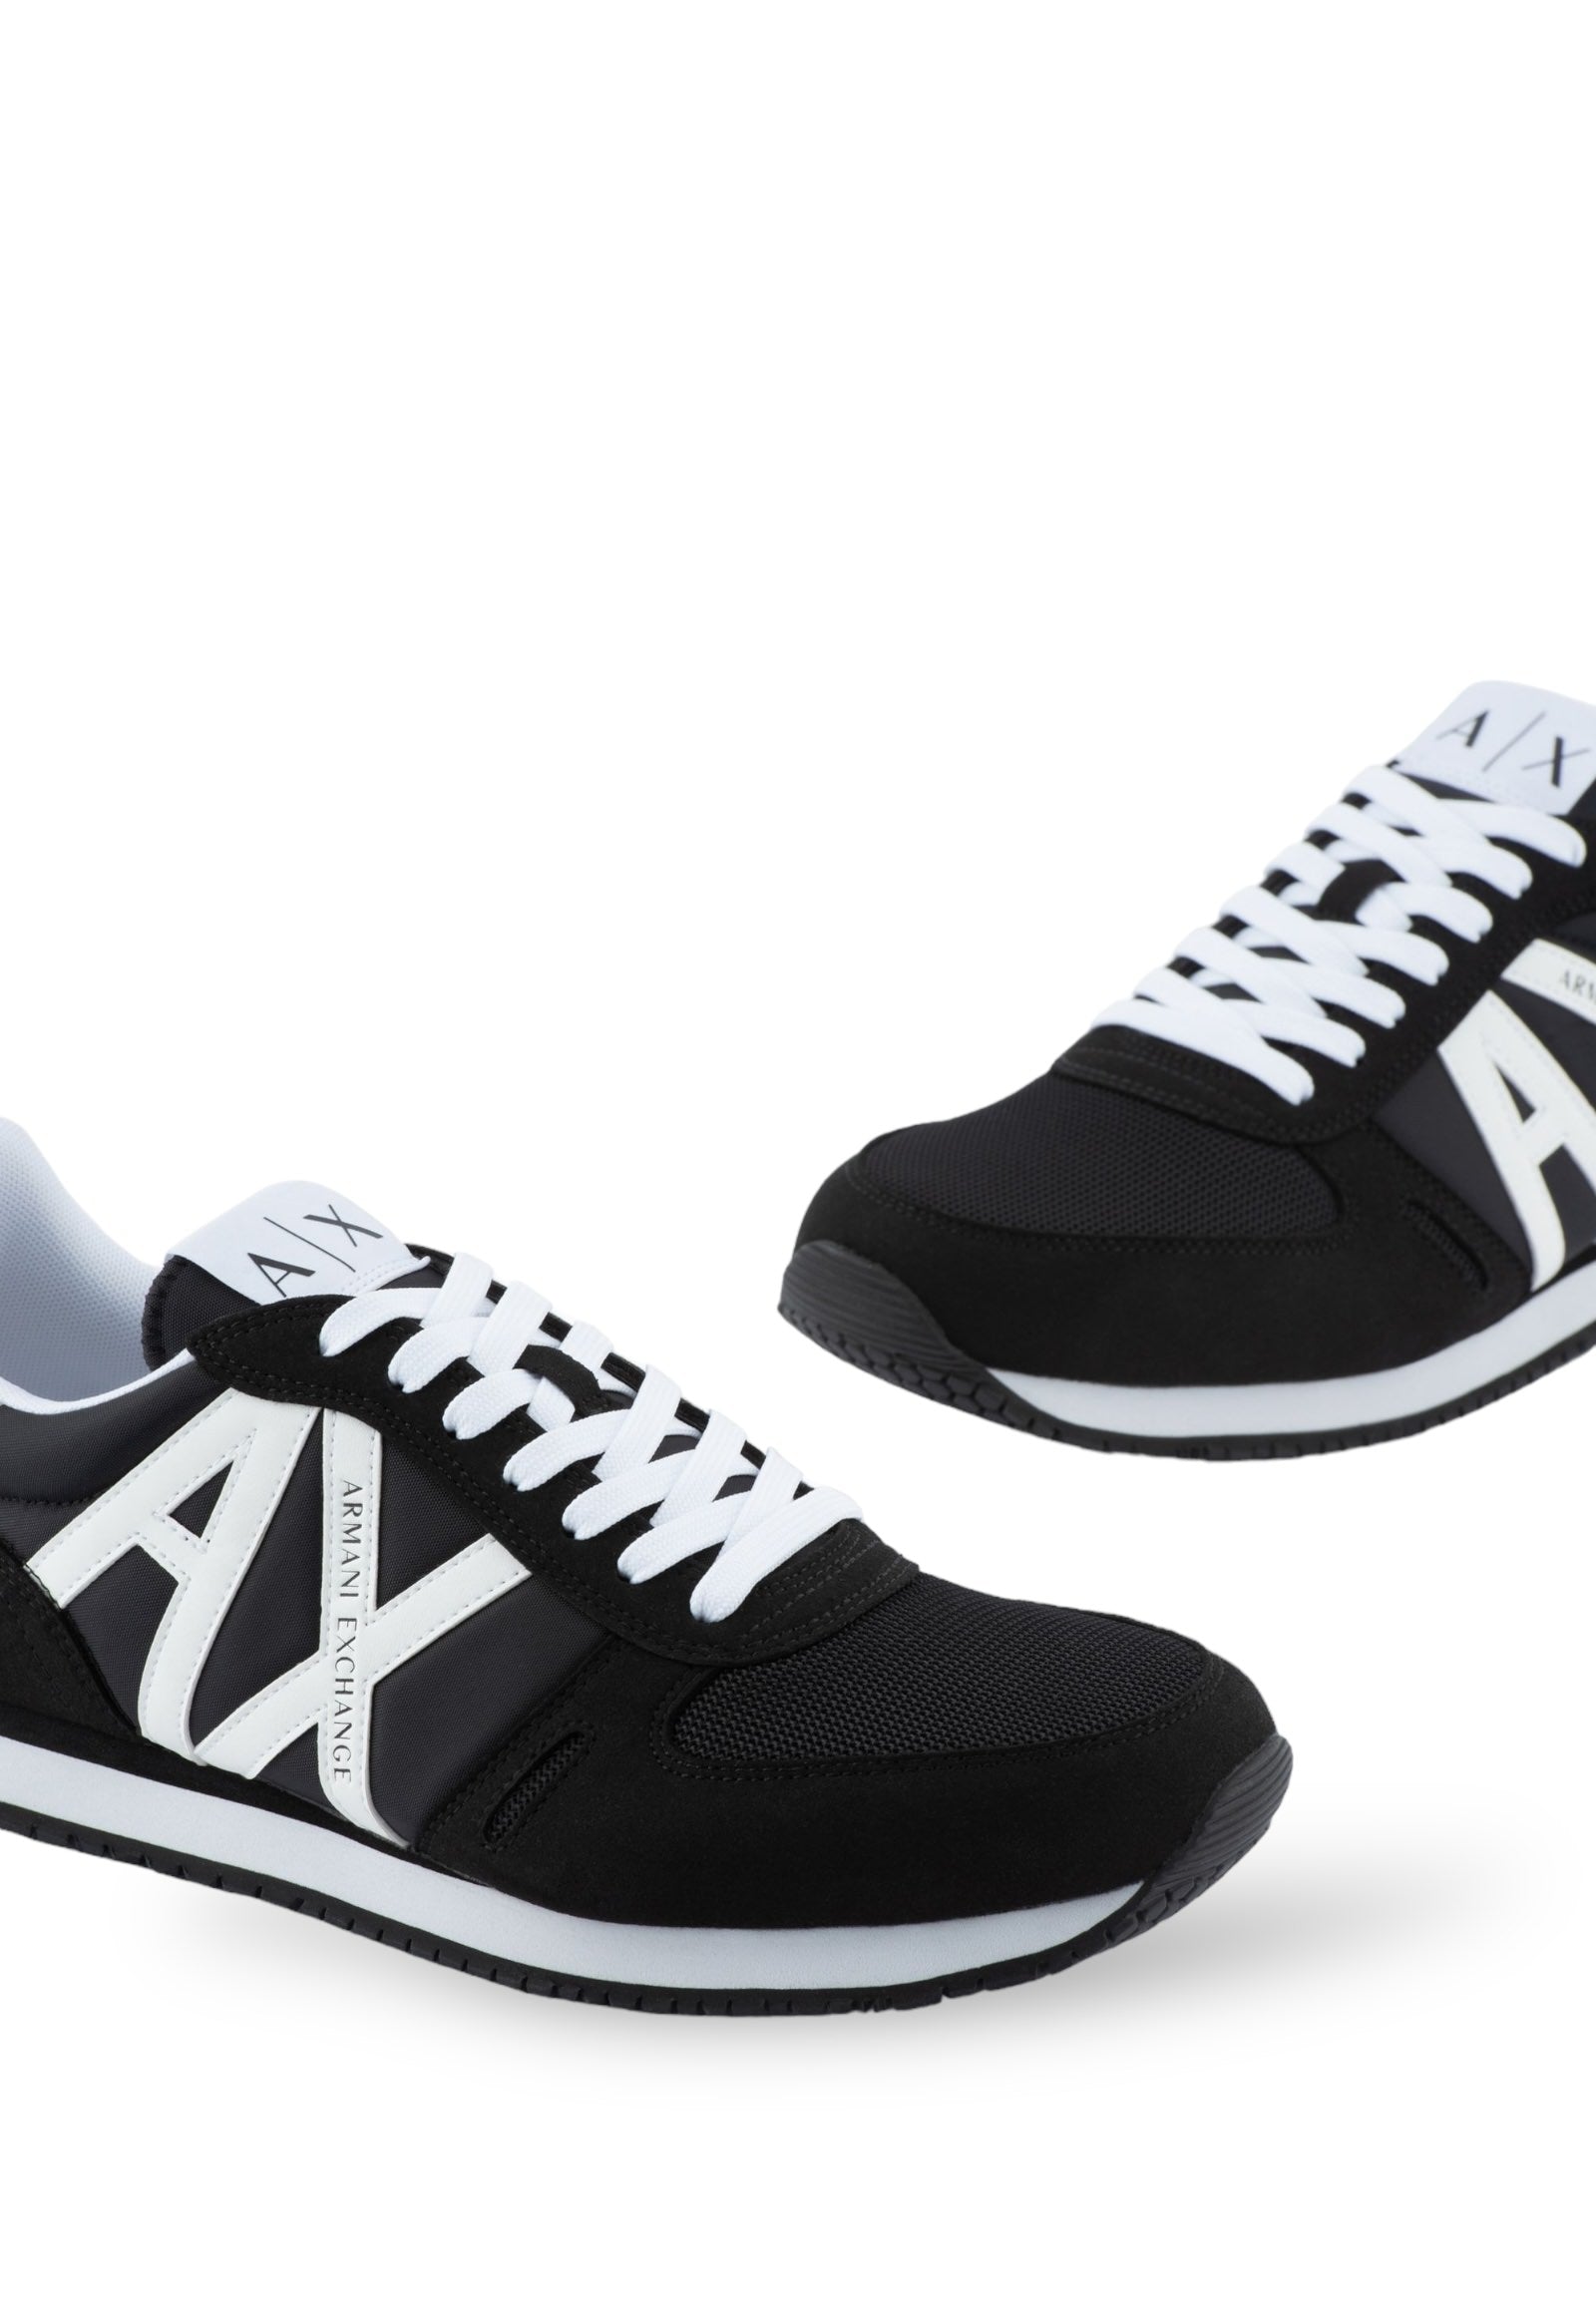 Sneakers Xux017 BlacK-White